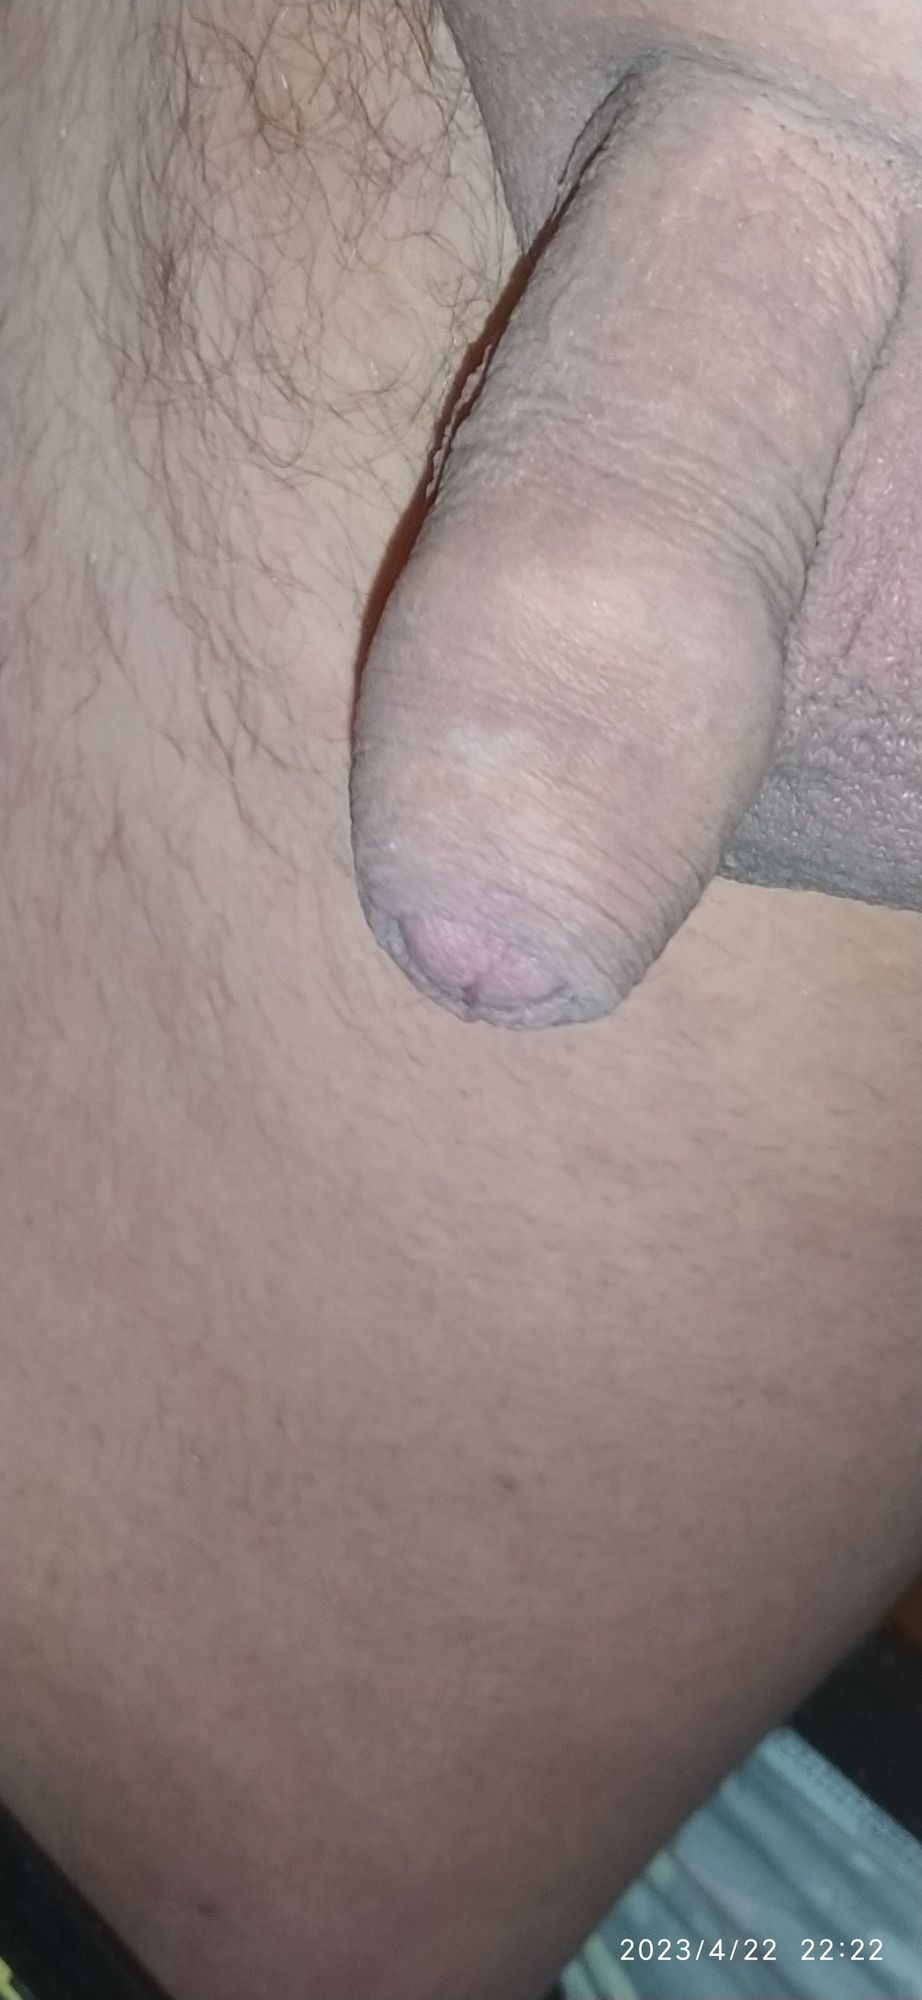 my penis